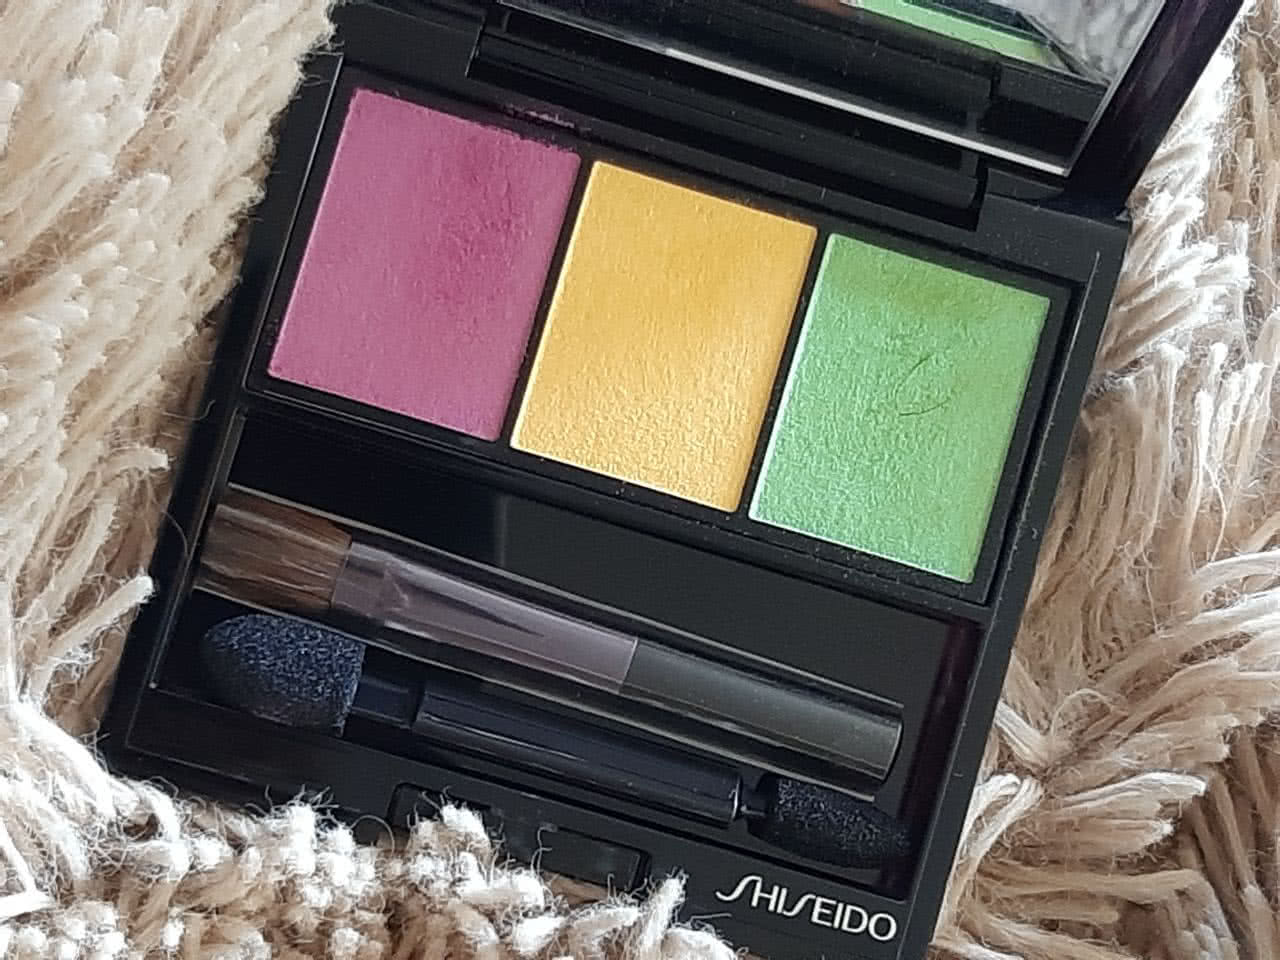 Shiseido Luminizing Satin Eye Color Trio - YE406 Tropicalia